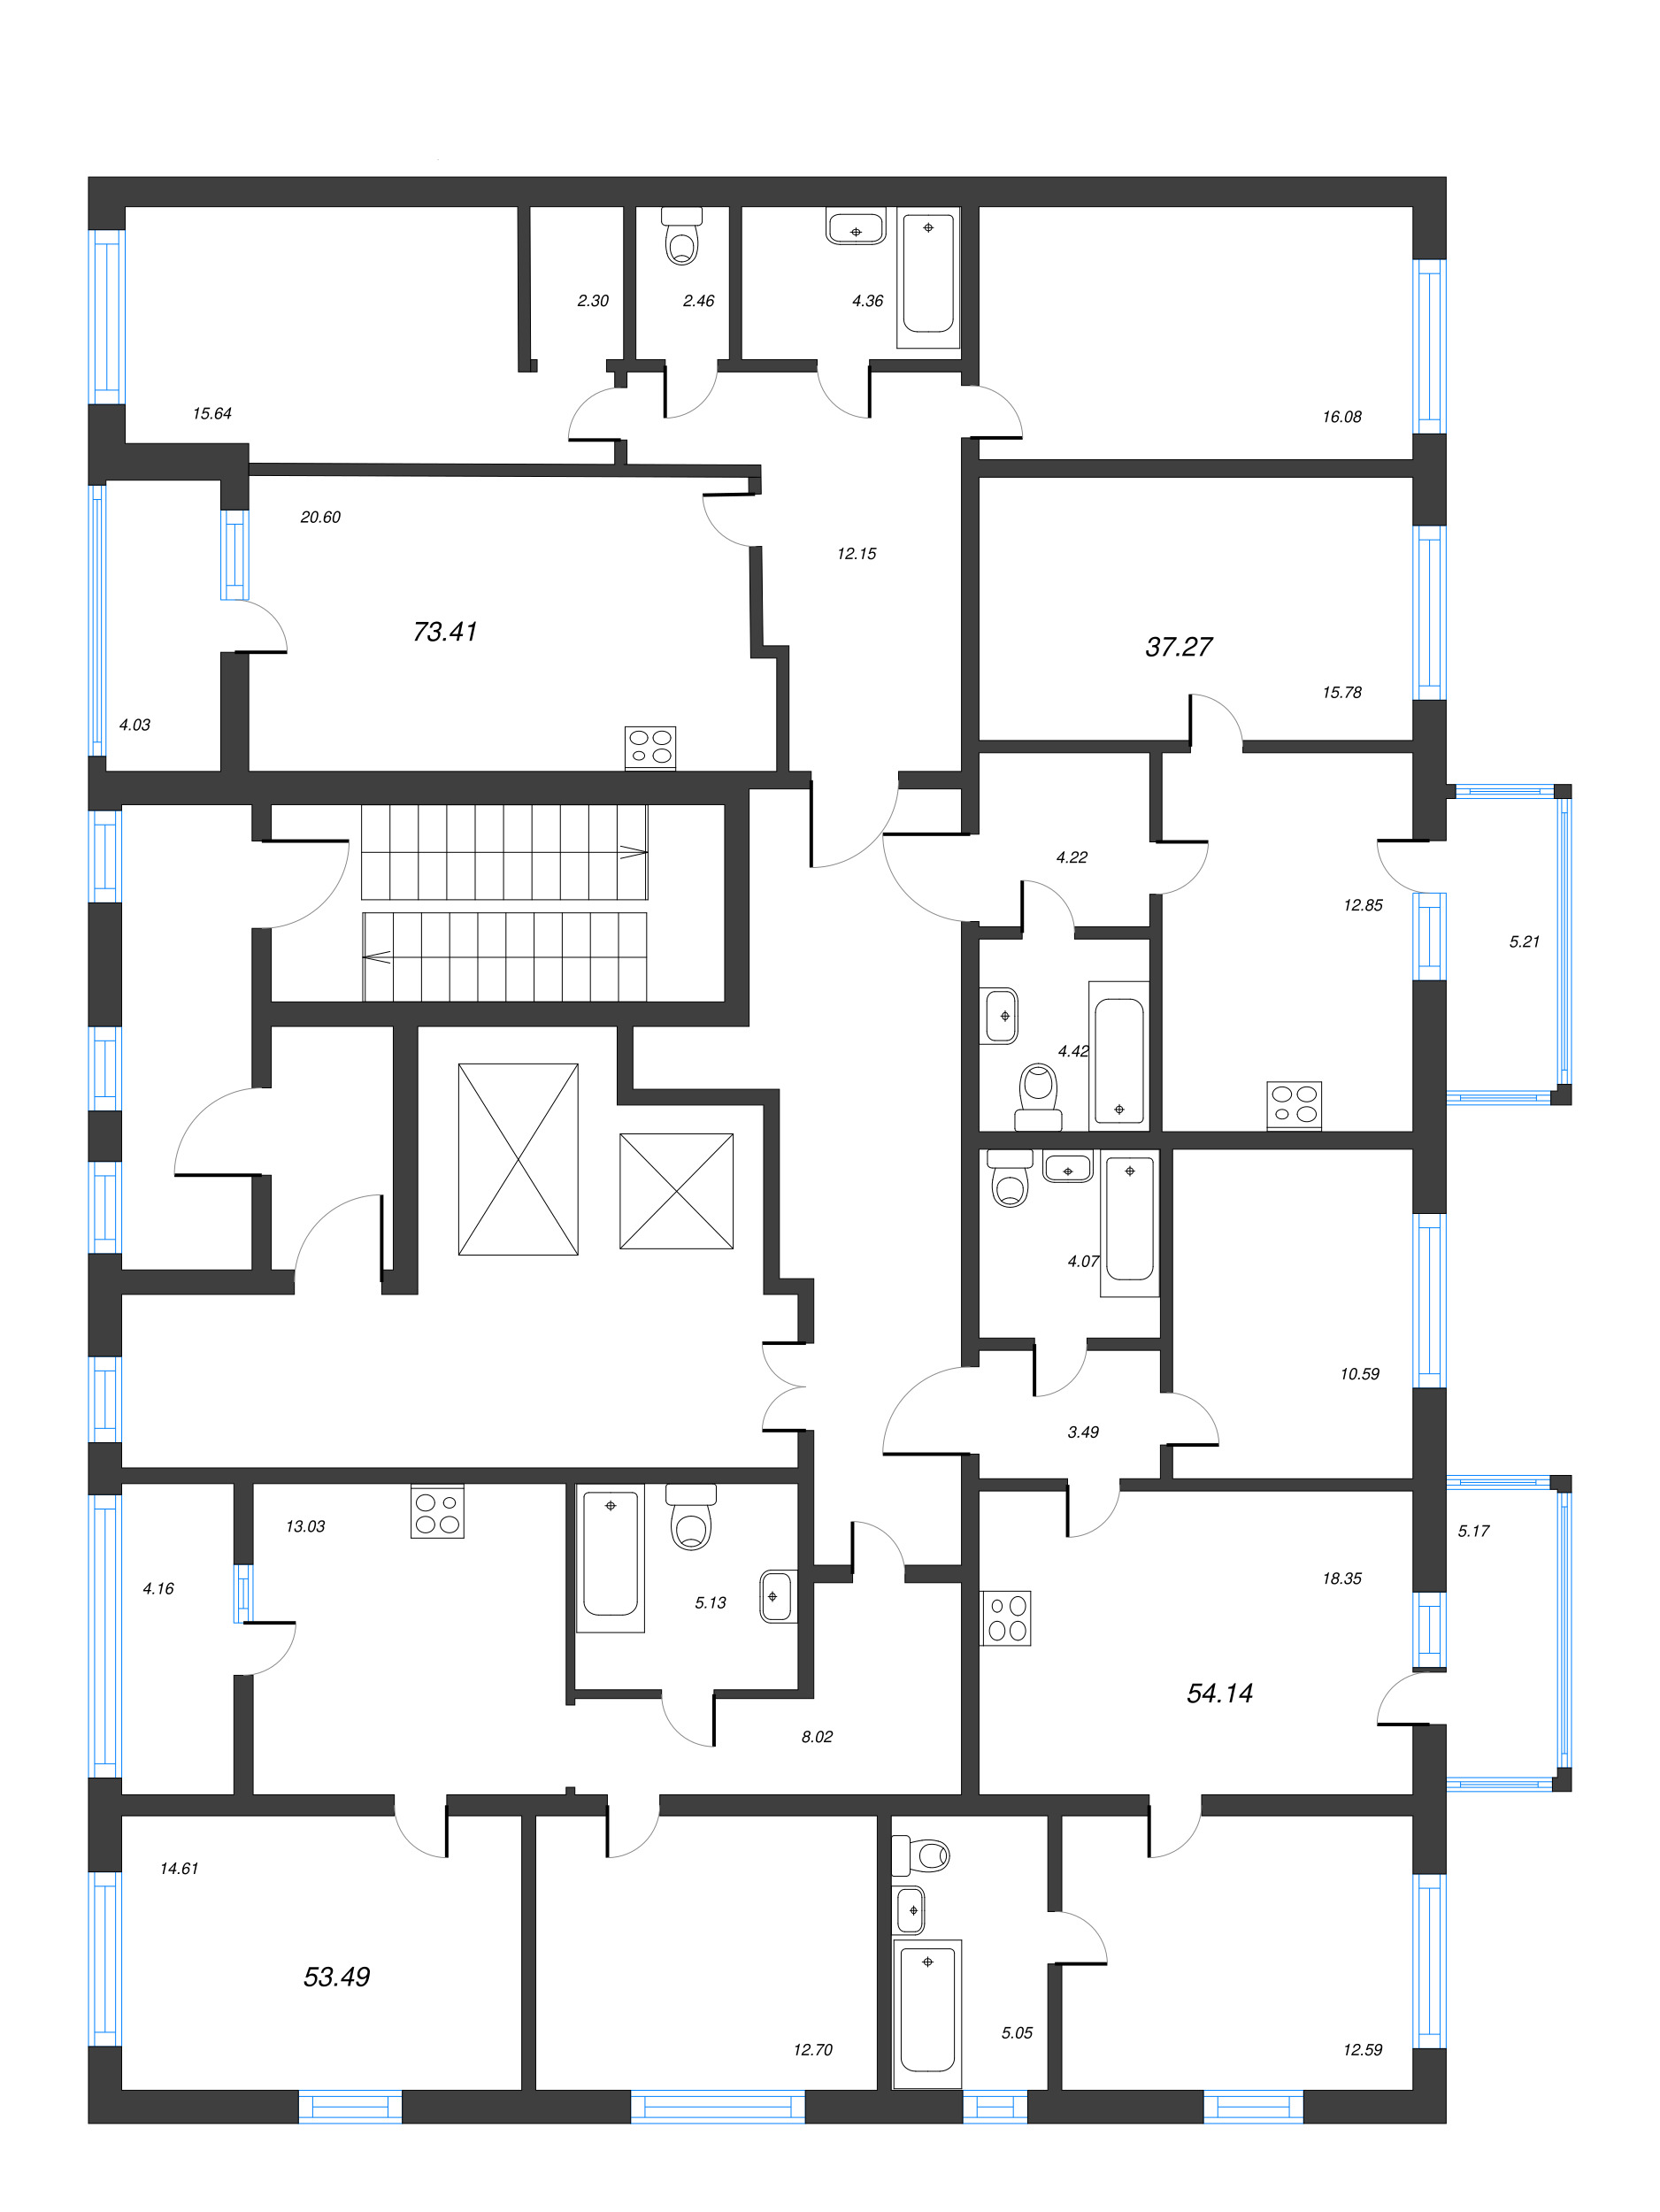 1-комнатная квартира, 37.27 м² в ЖК "Чёрная речка от Ильича" - планировка этажа